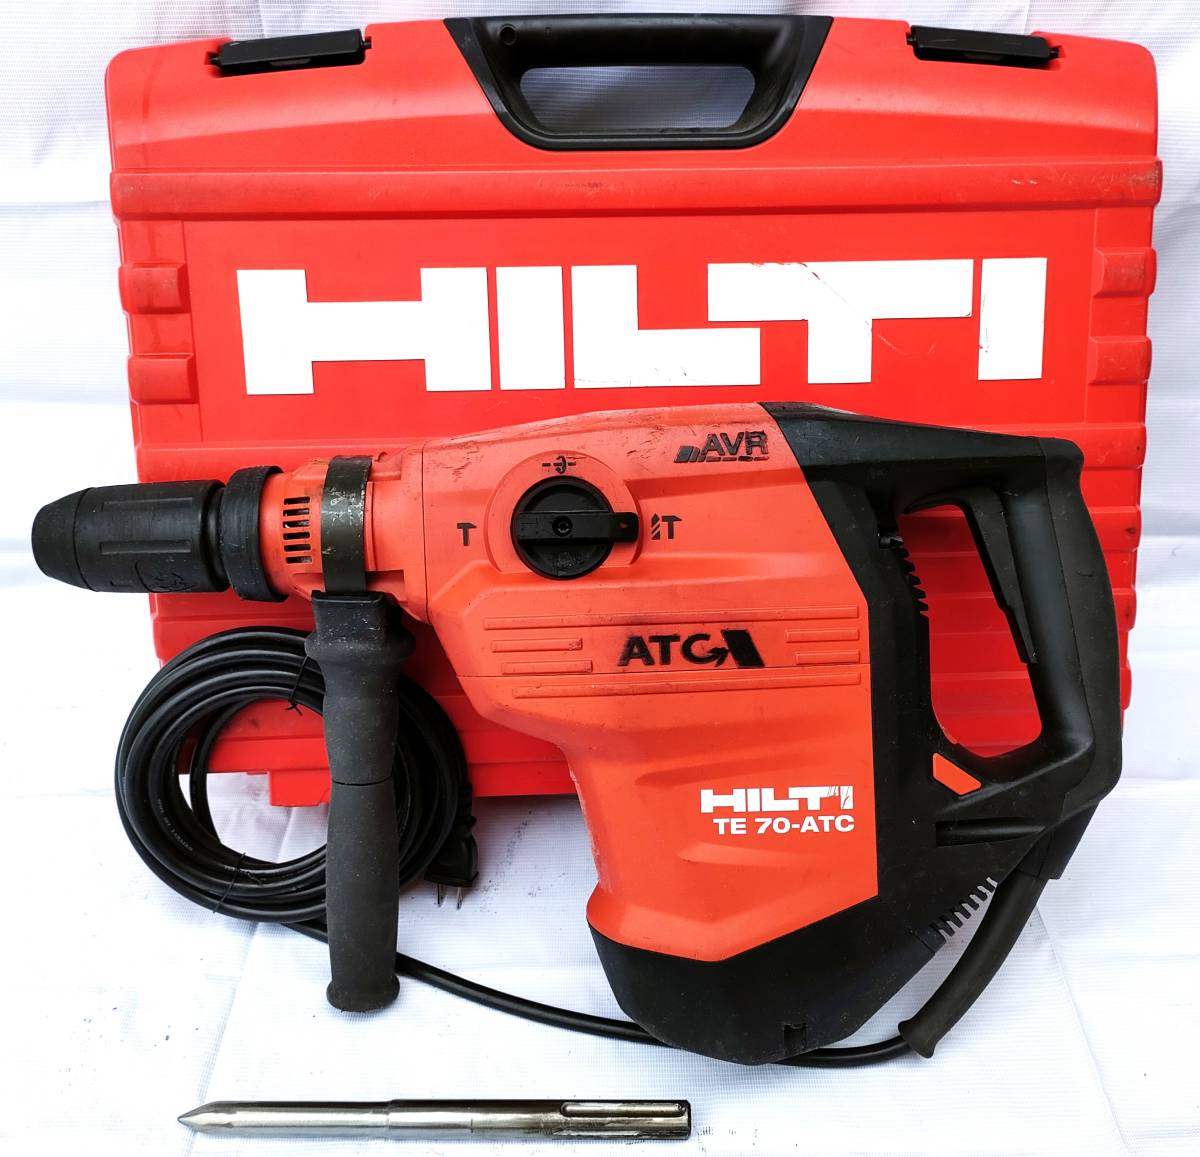 ヤフオク! -「hilti te70」(工具、DIY用品) の落札相場・落札価格